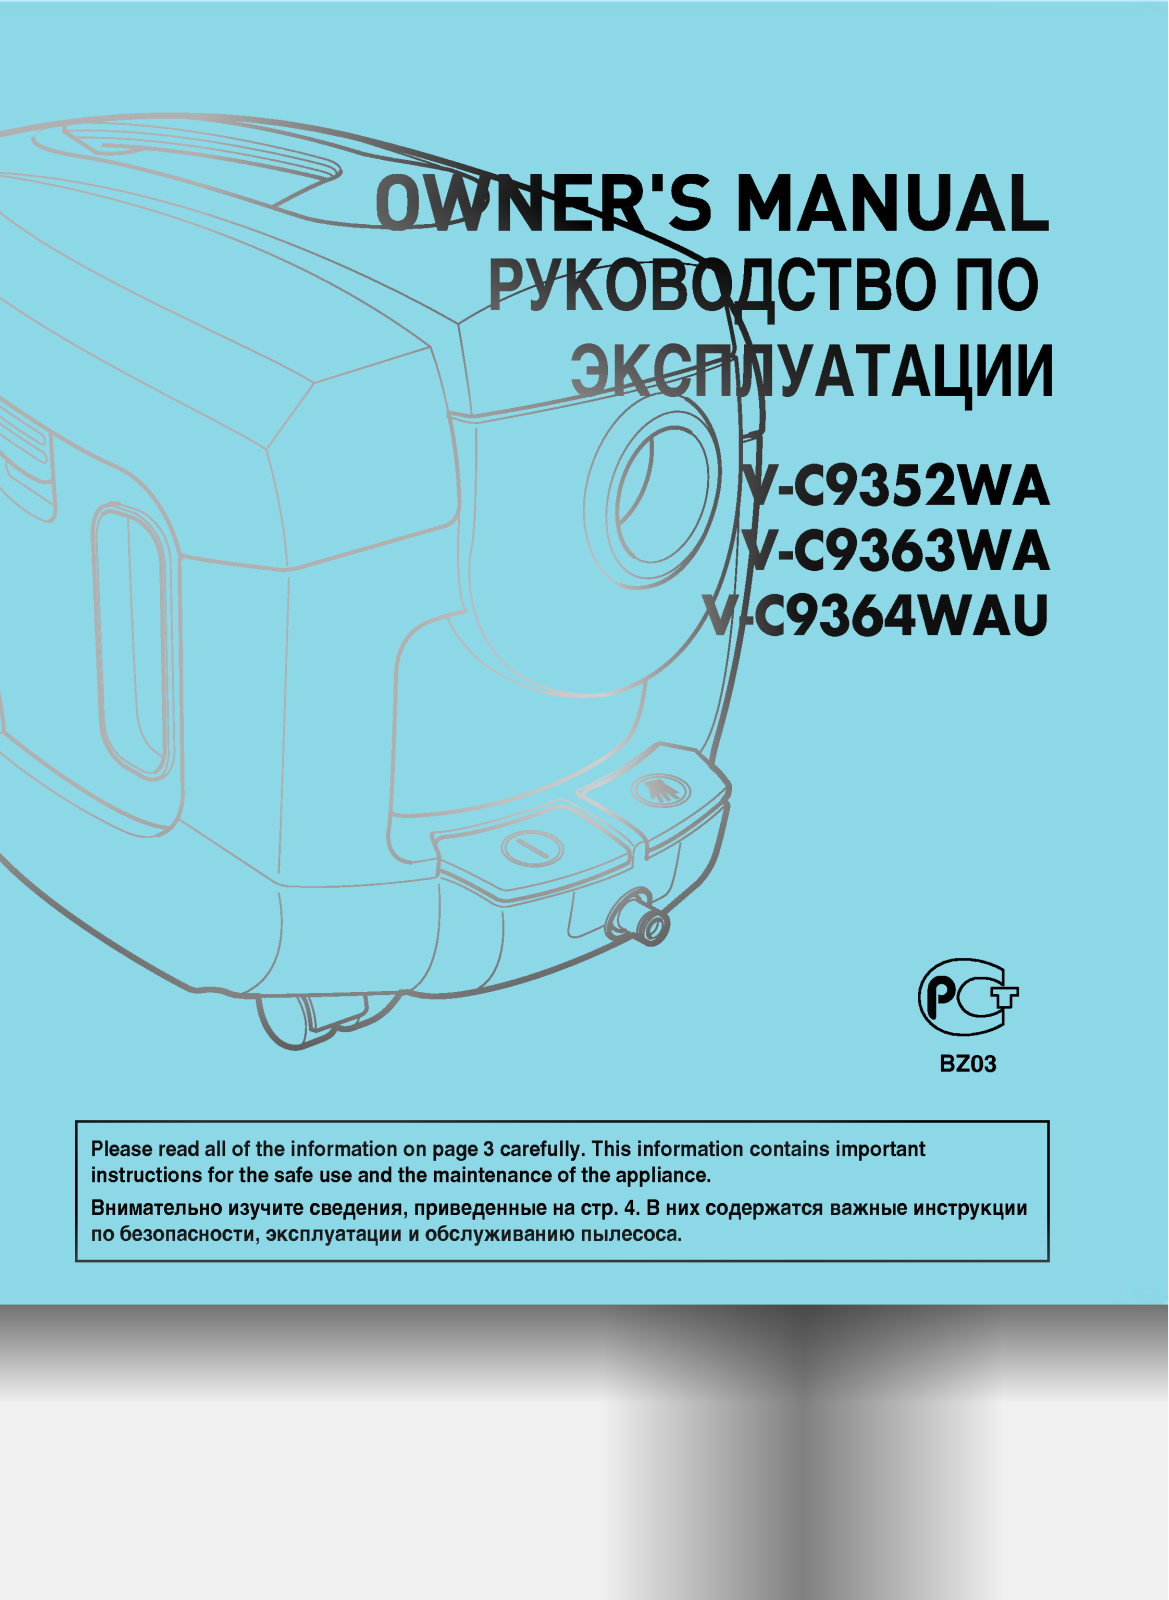 LG V-C9352WA, V-C9363WA, V-C9364WAU User manual